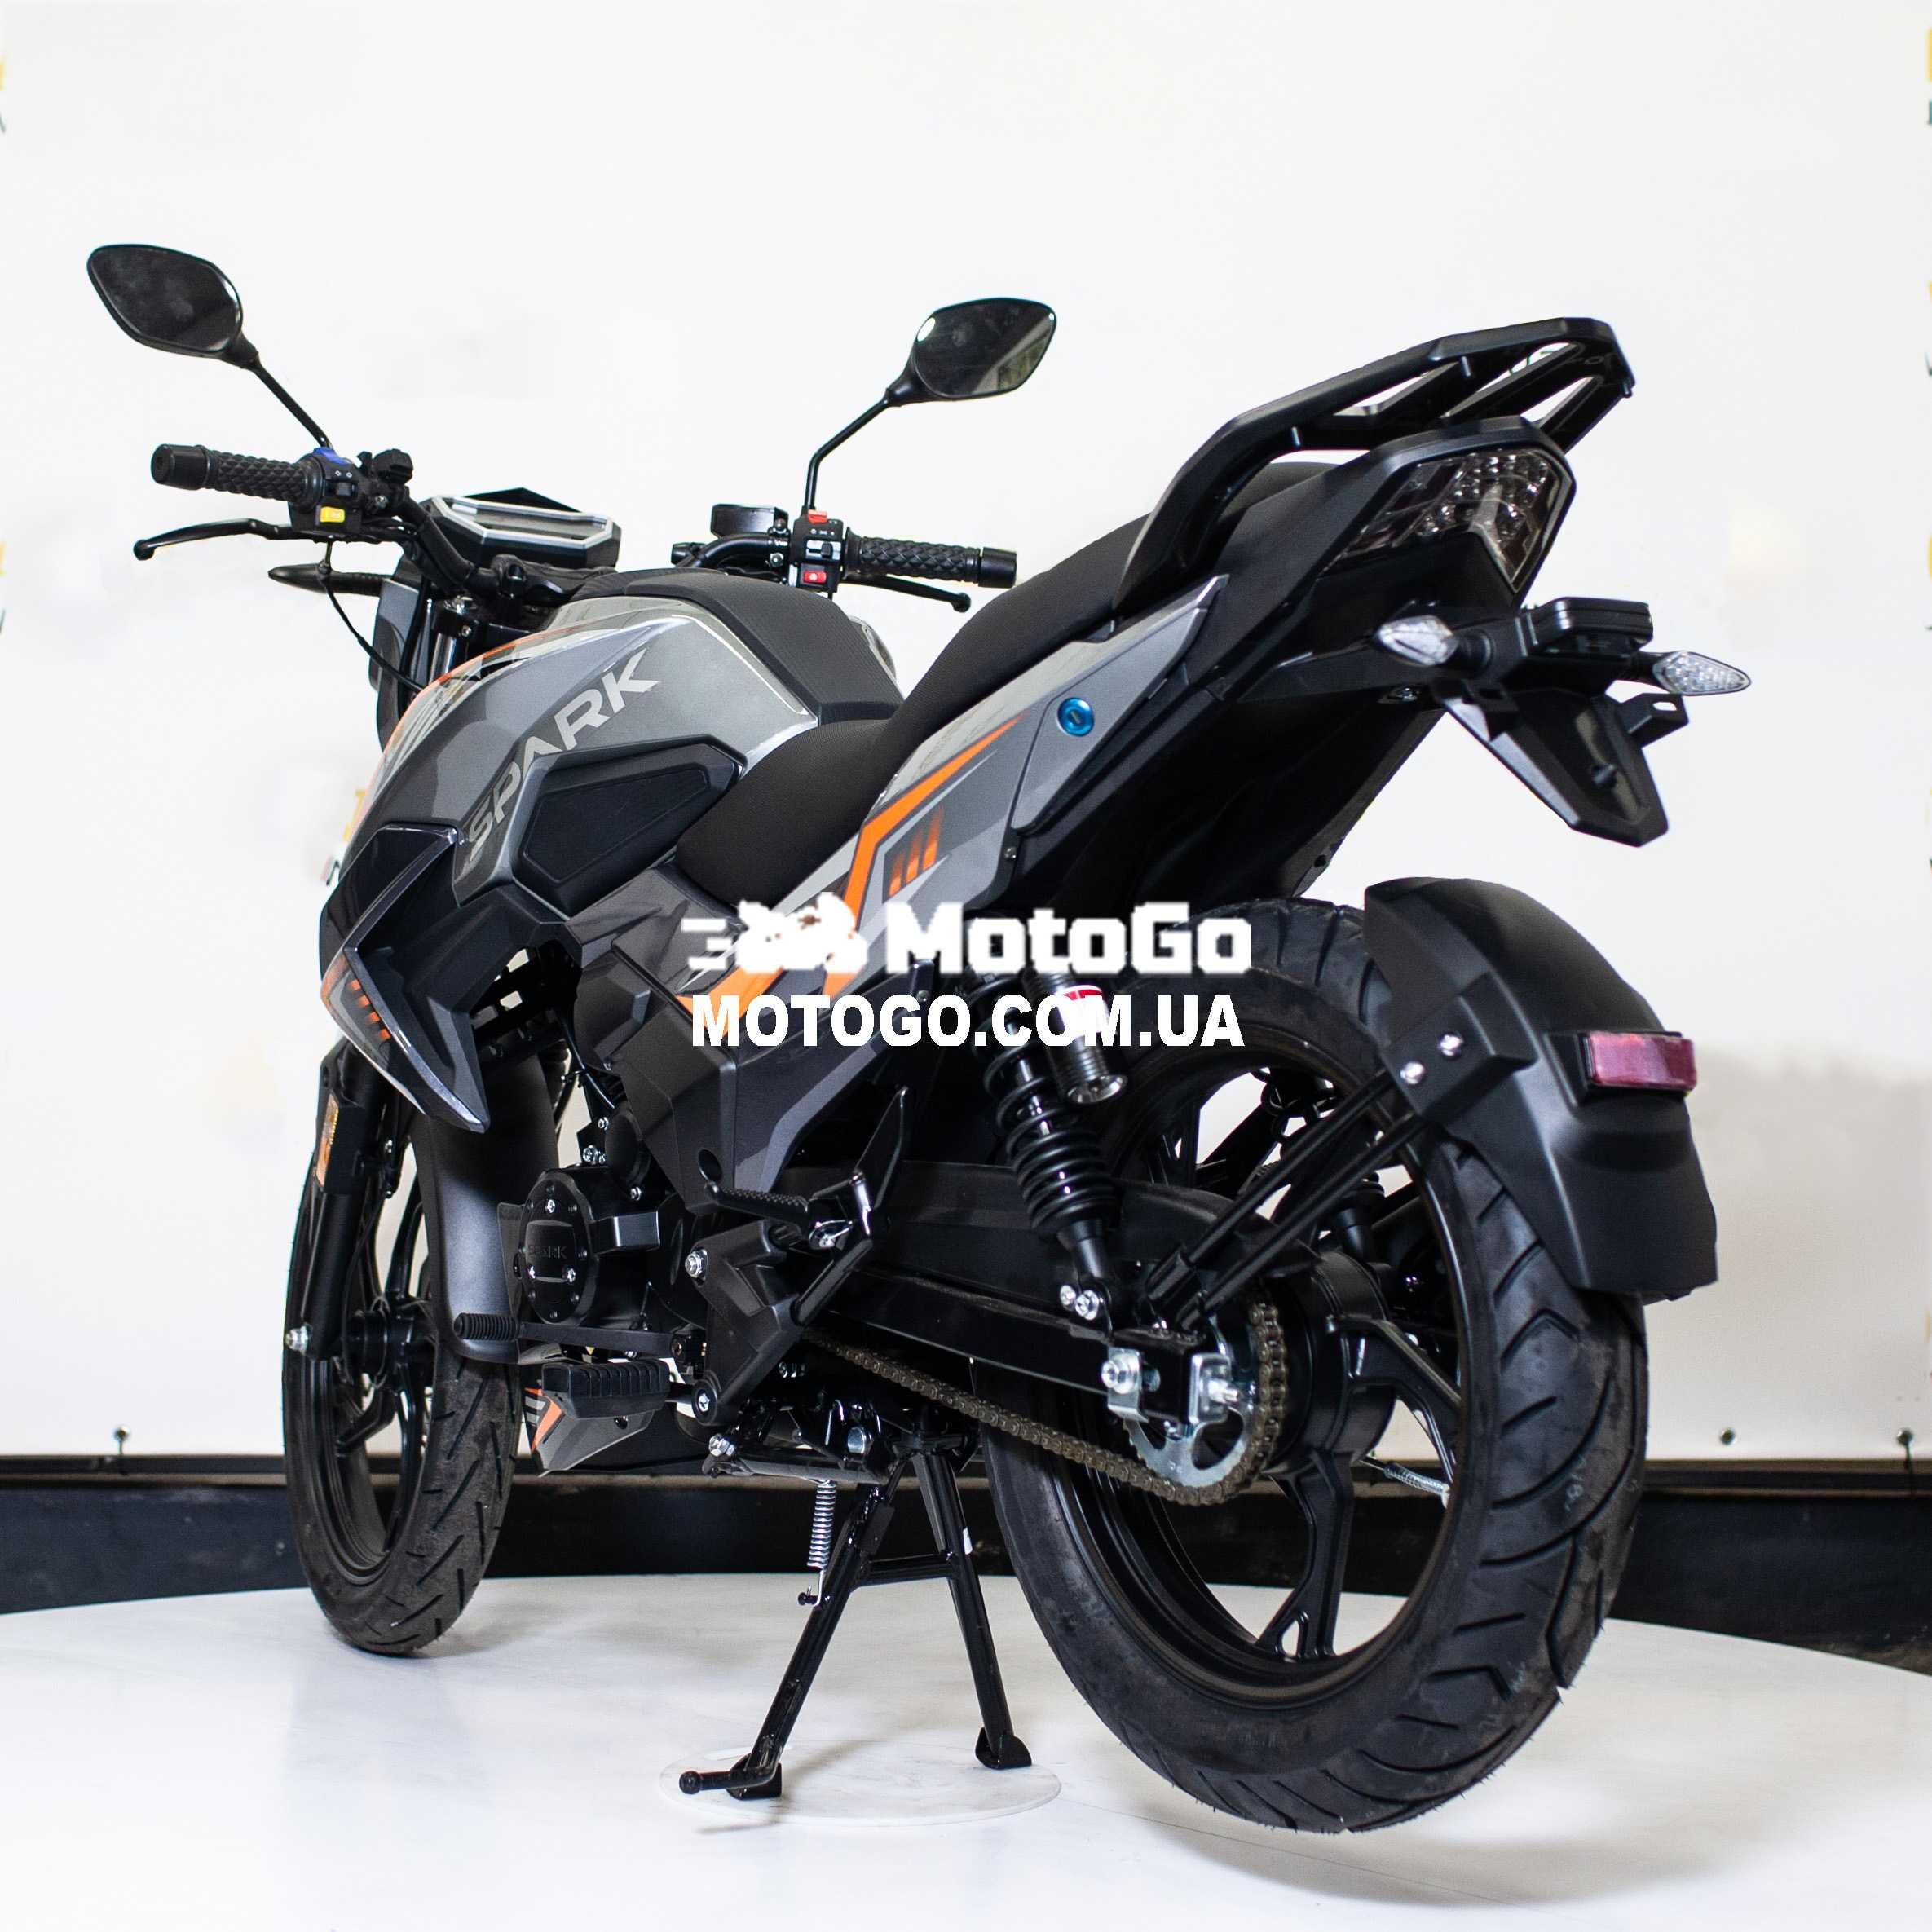 Новый Мотоцикл Spark SP200R-32. Гарантия, Сервис - Мотосалон MotoGo !